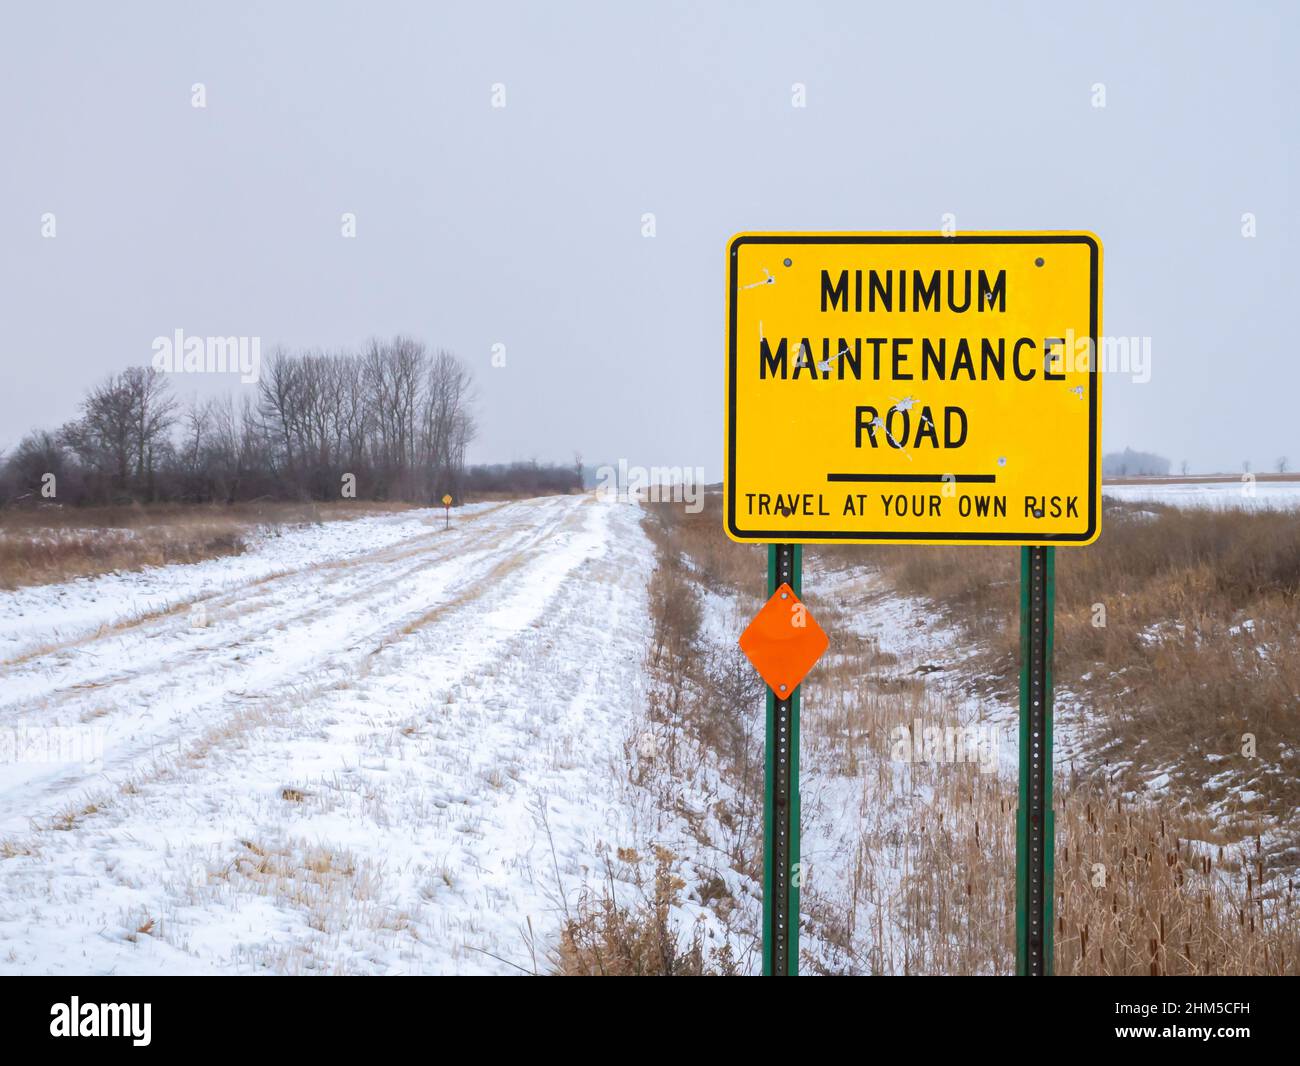 Yellow Road Sign warning of MINIMUM MAINTENANCE ROAD In rural Minnesota Stock Photo